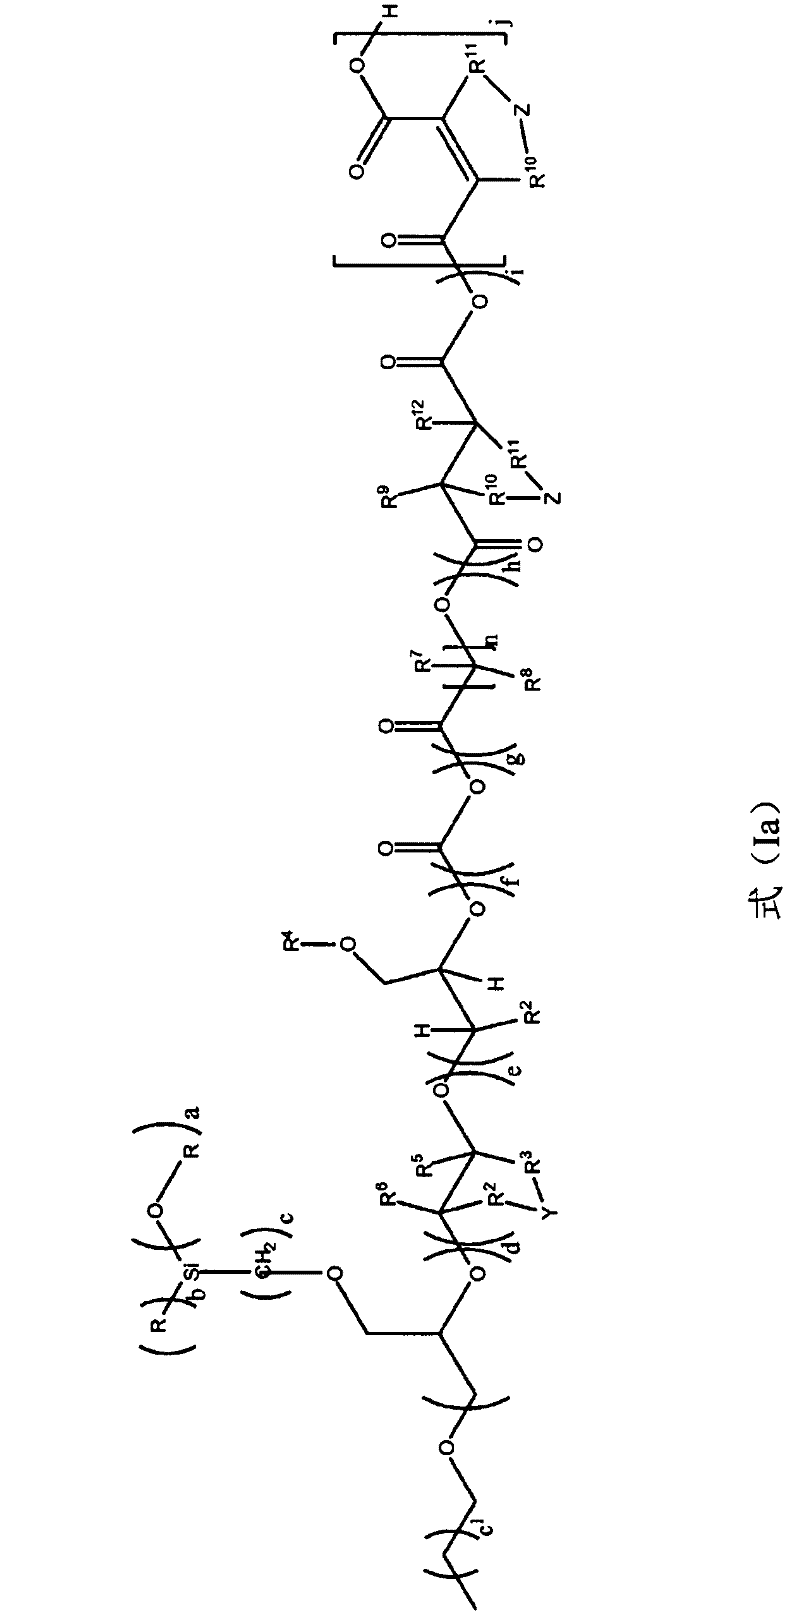 Novel polyethersiloxanes carrying alkoxysilyl groups and method for the production thereof